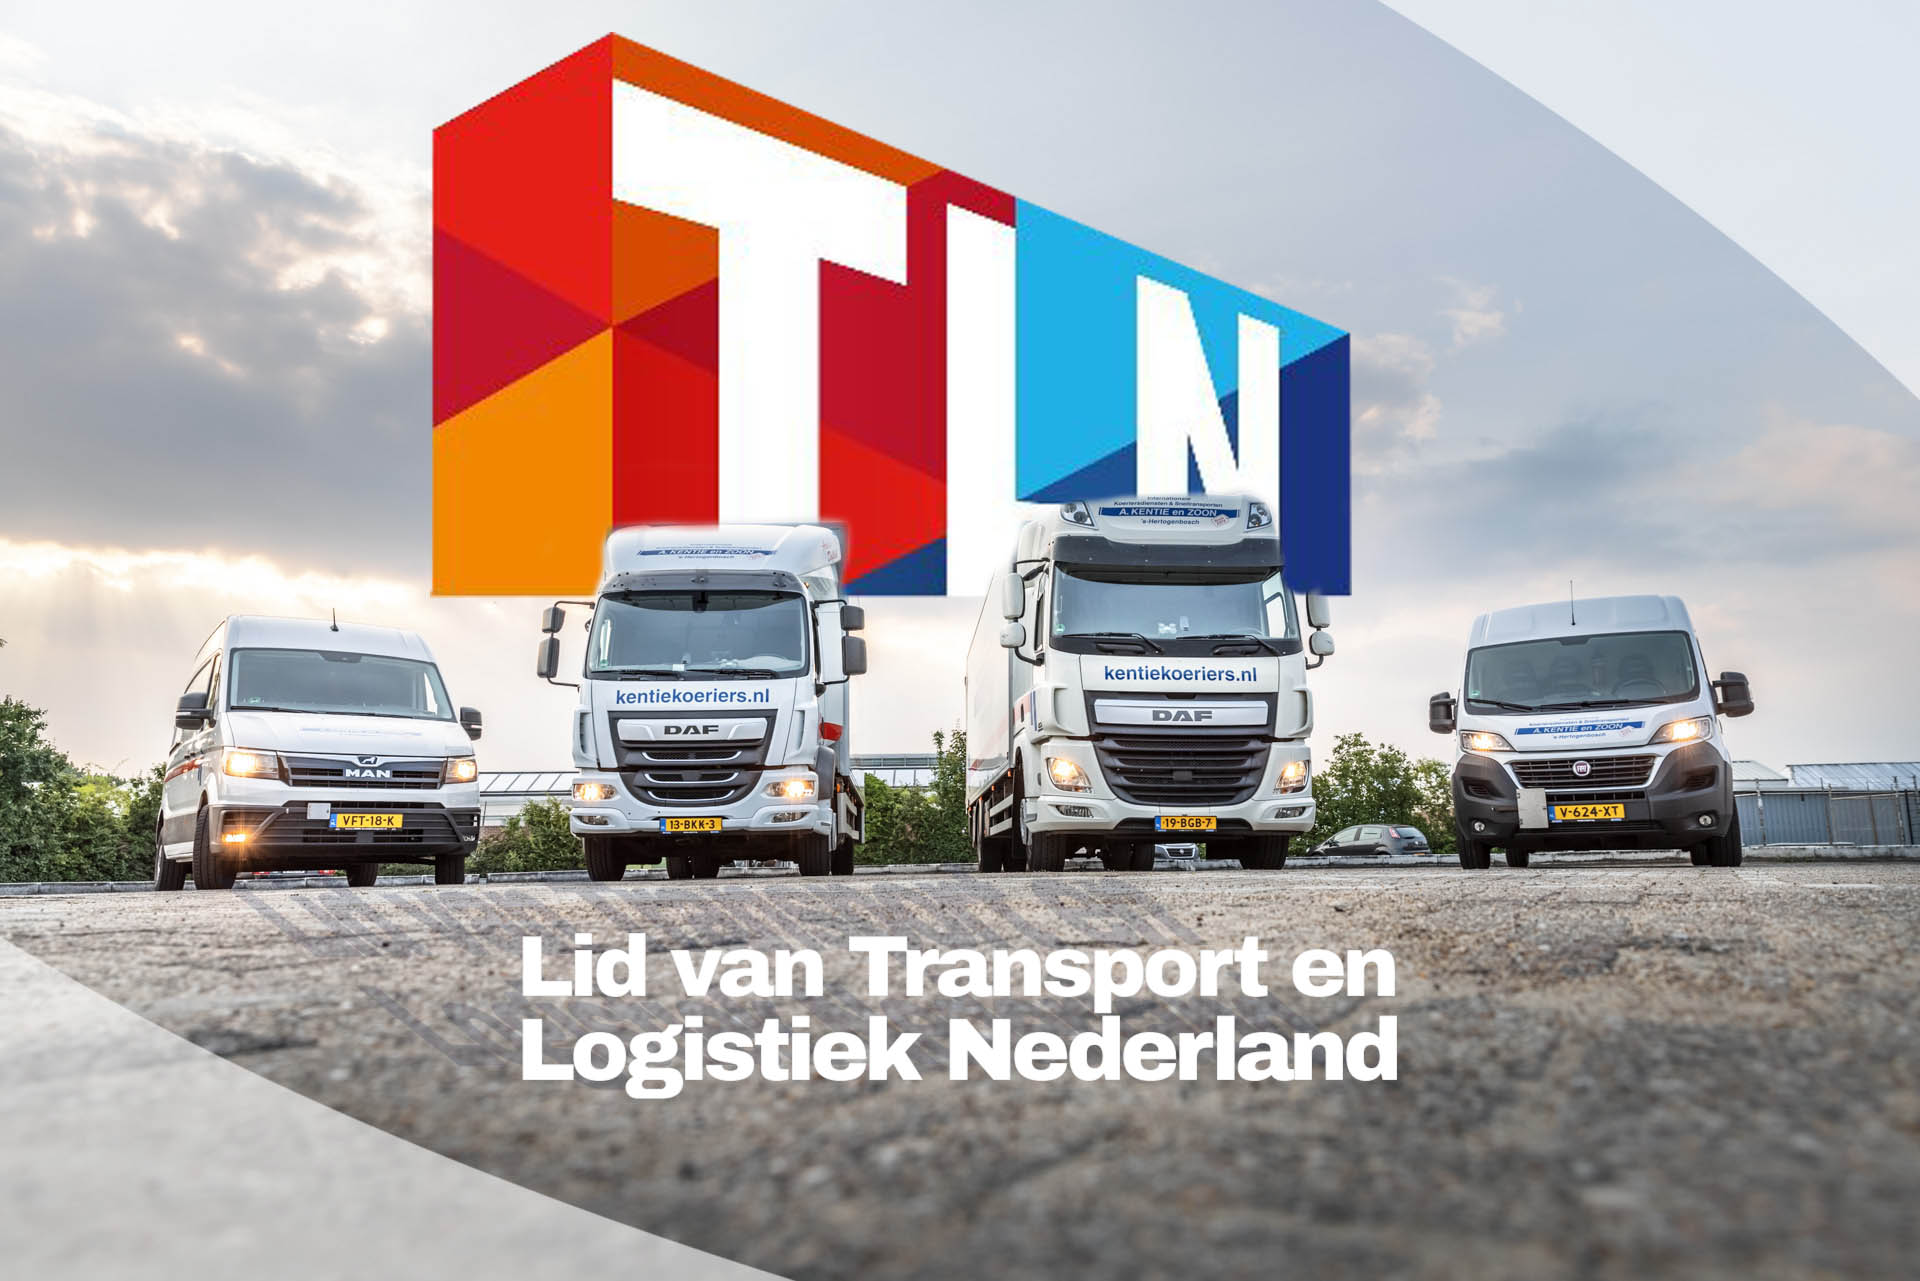 Featured image for “Lid van Transport en Logistiek Nederland”